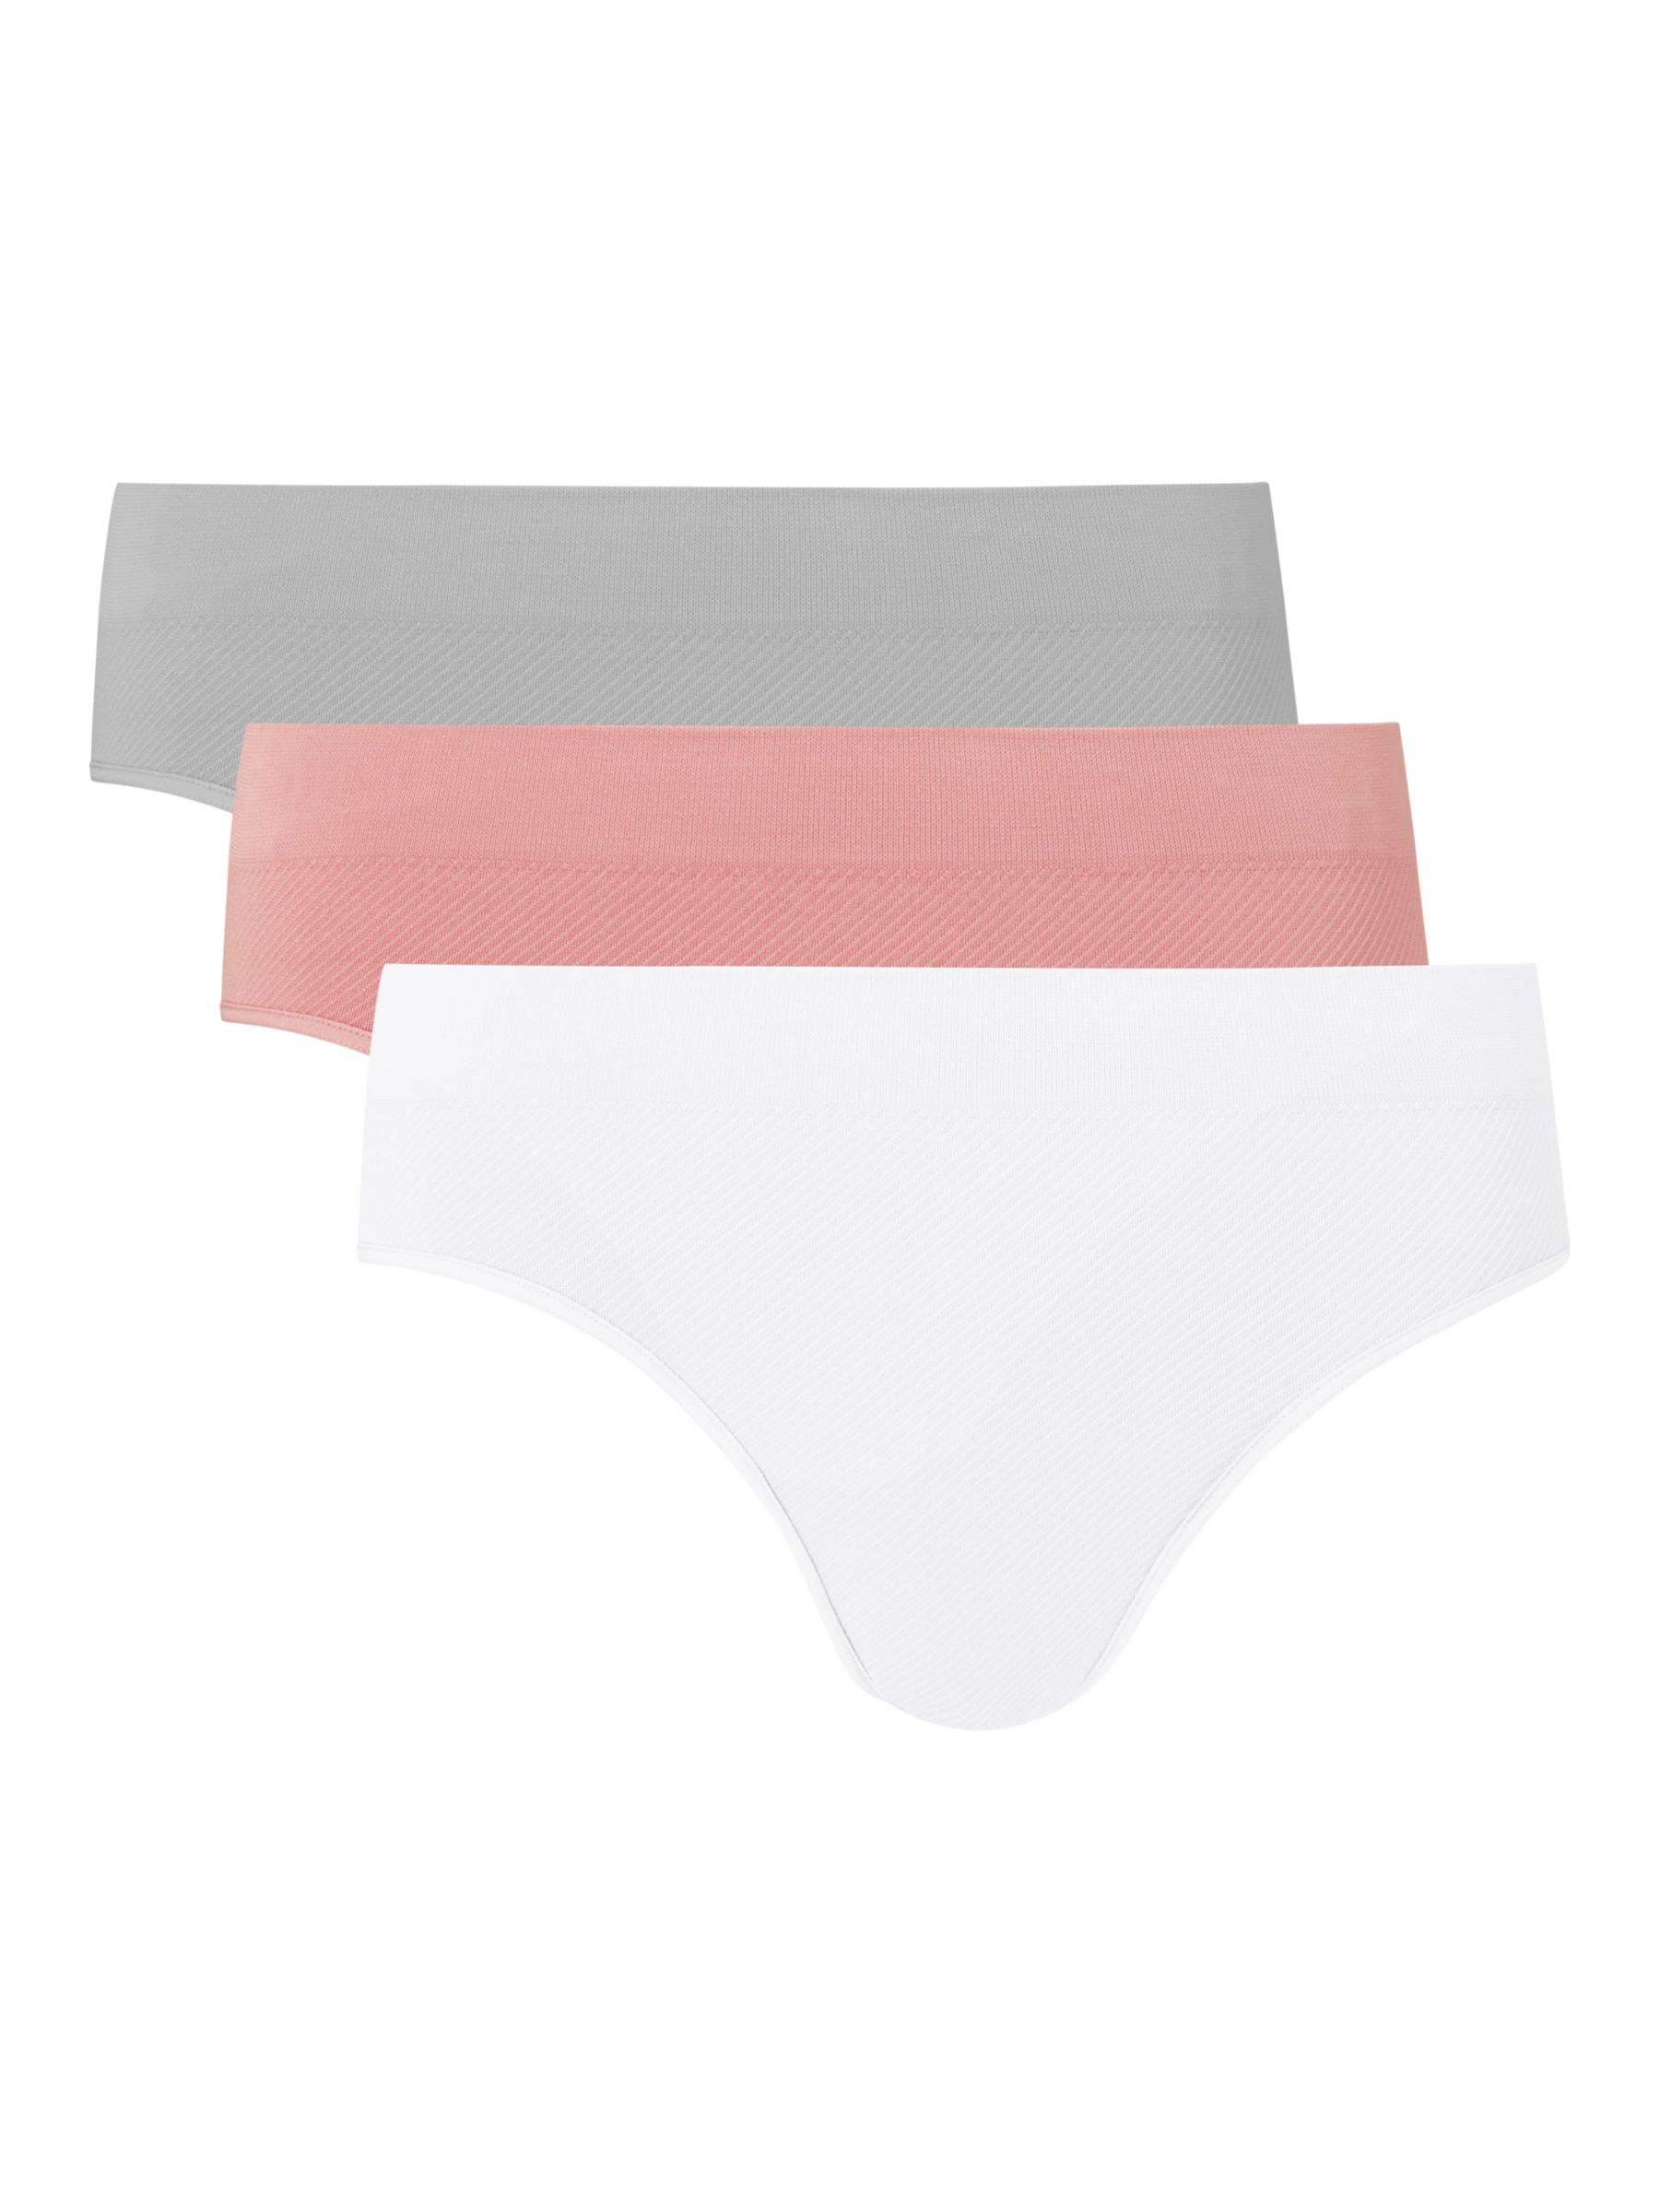 John Lewis Seam Free Ribbed Bikini Knickers, Pack of 3, Pink/White